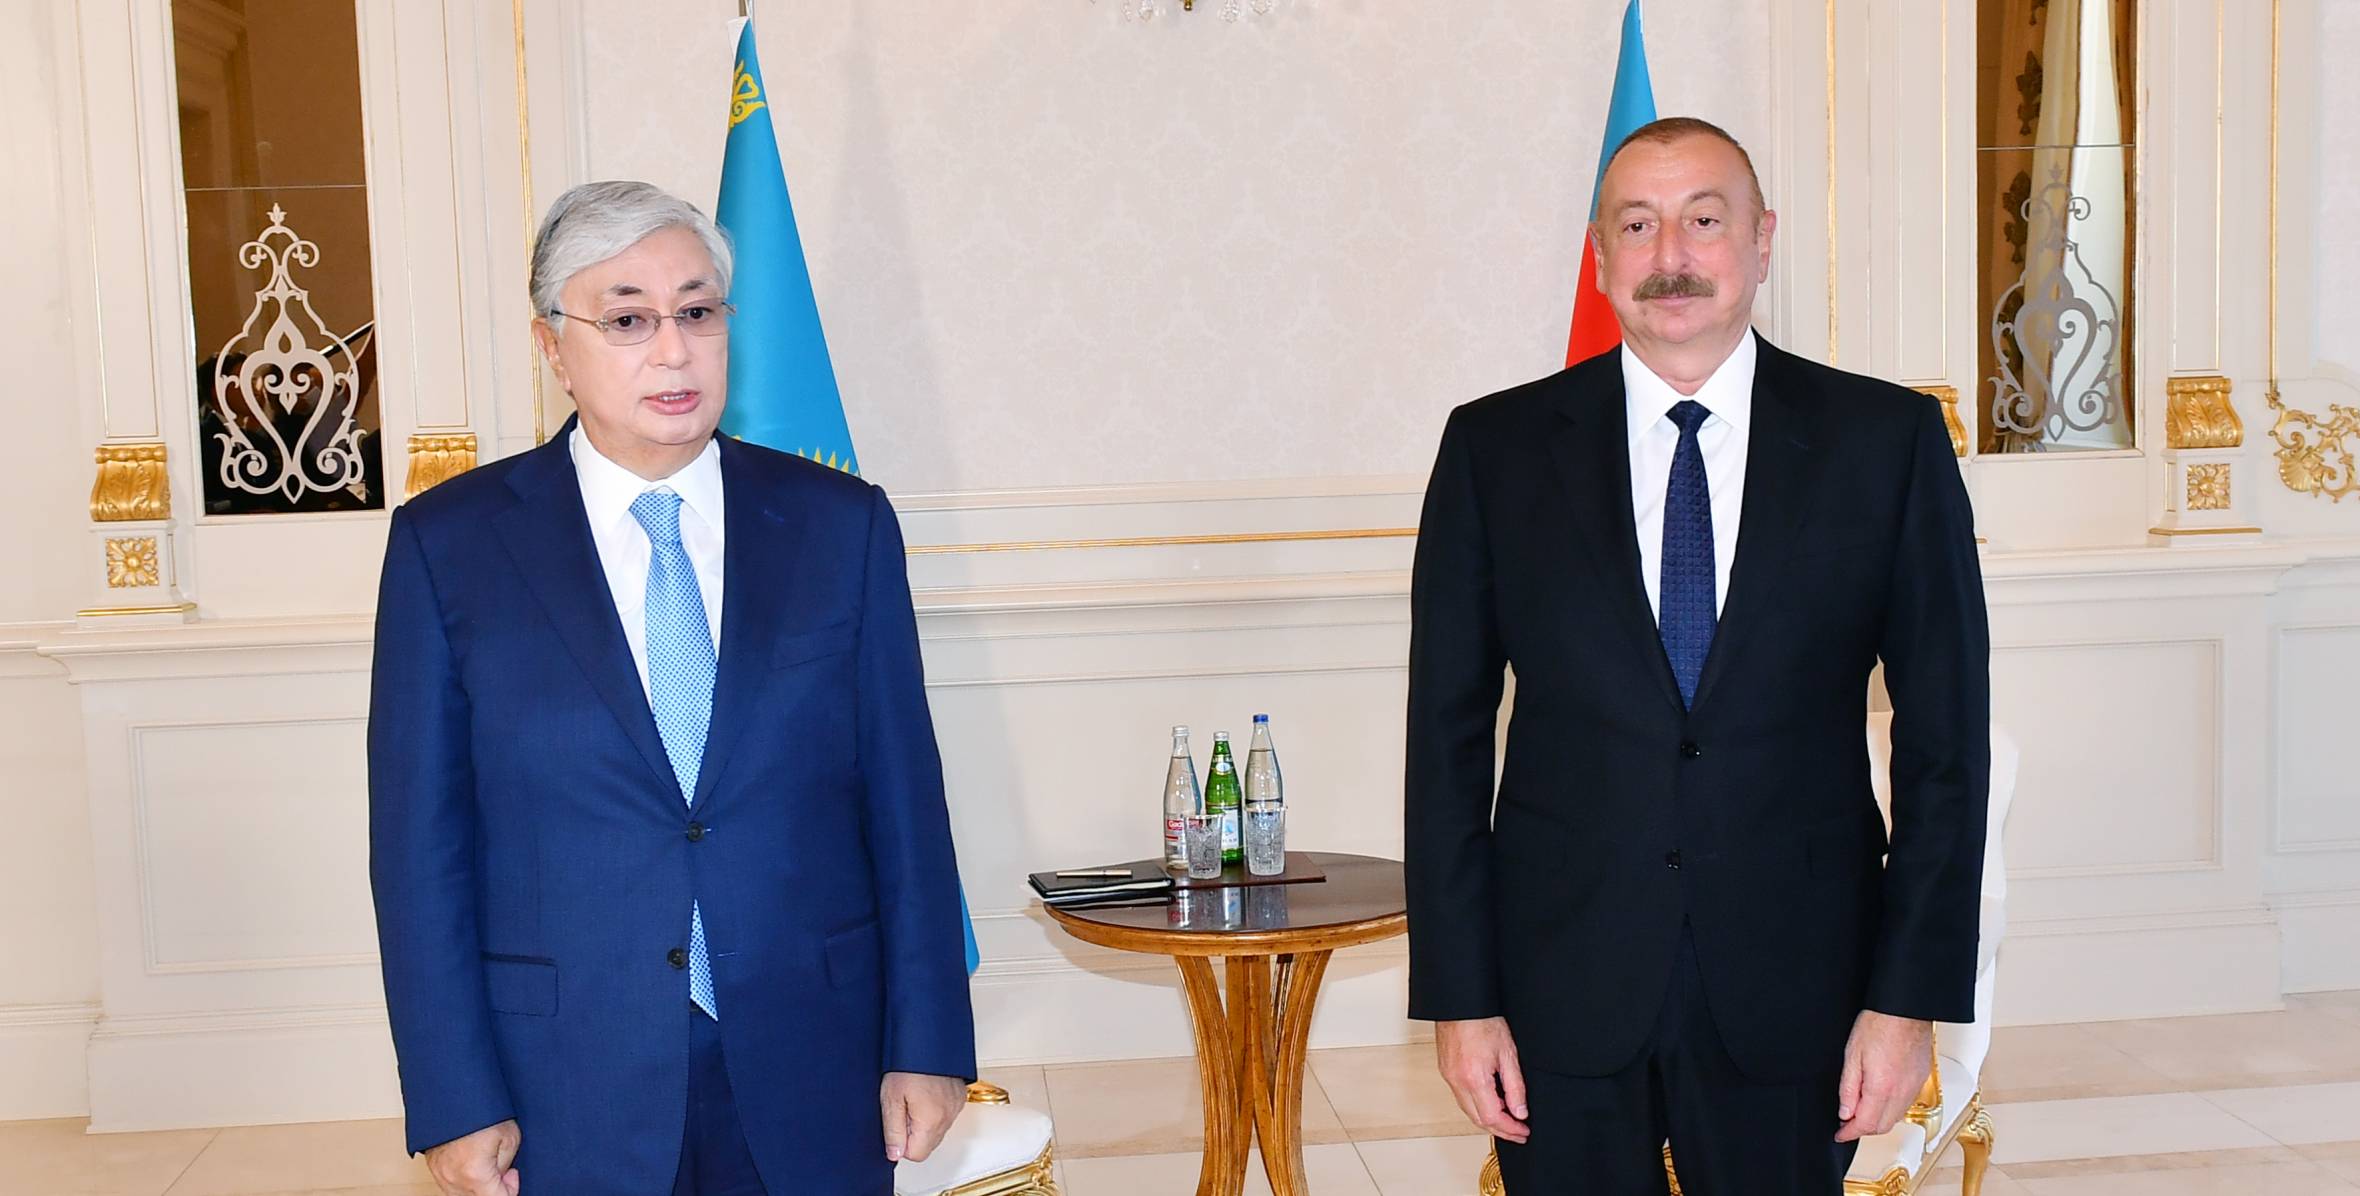 Ilham Aliyev was awarded highest order of Kazakhstan “Altyn Kyran” – “Golden Eagle”